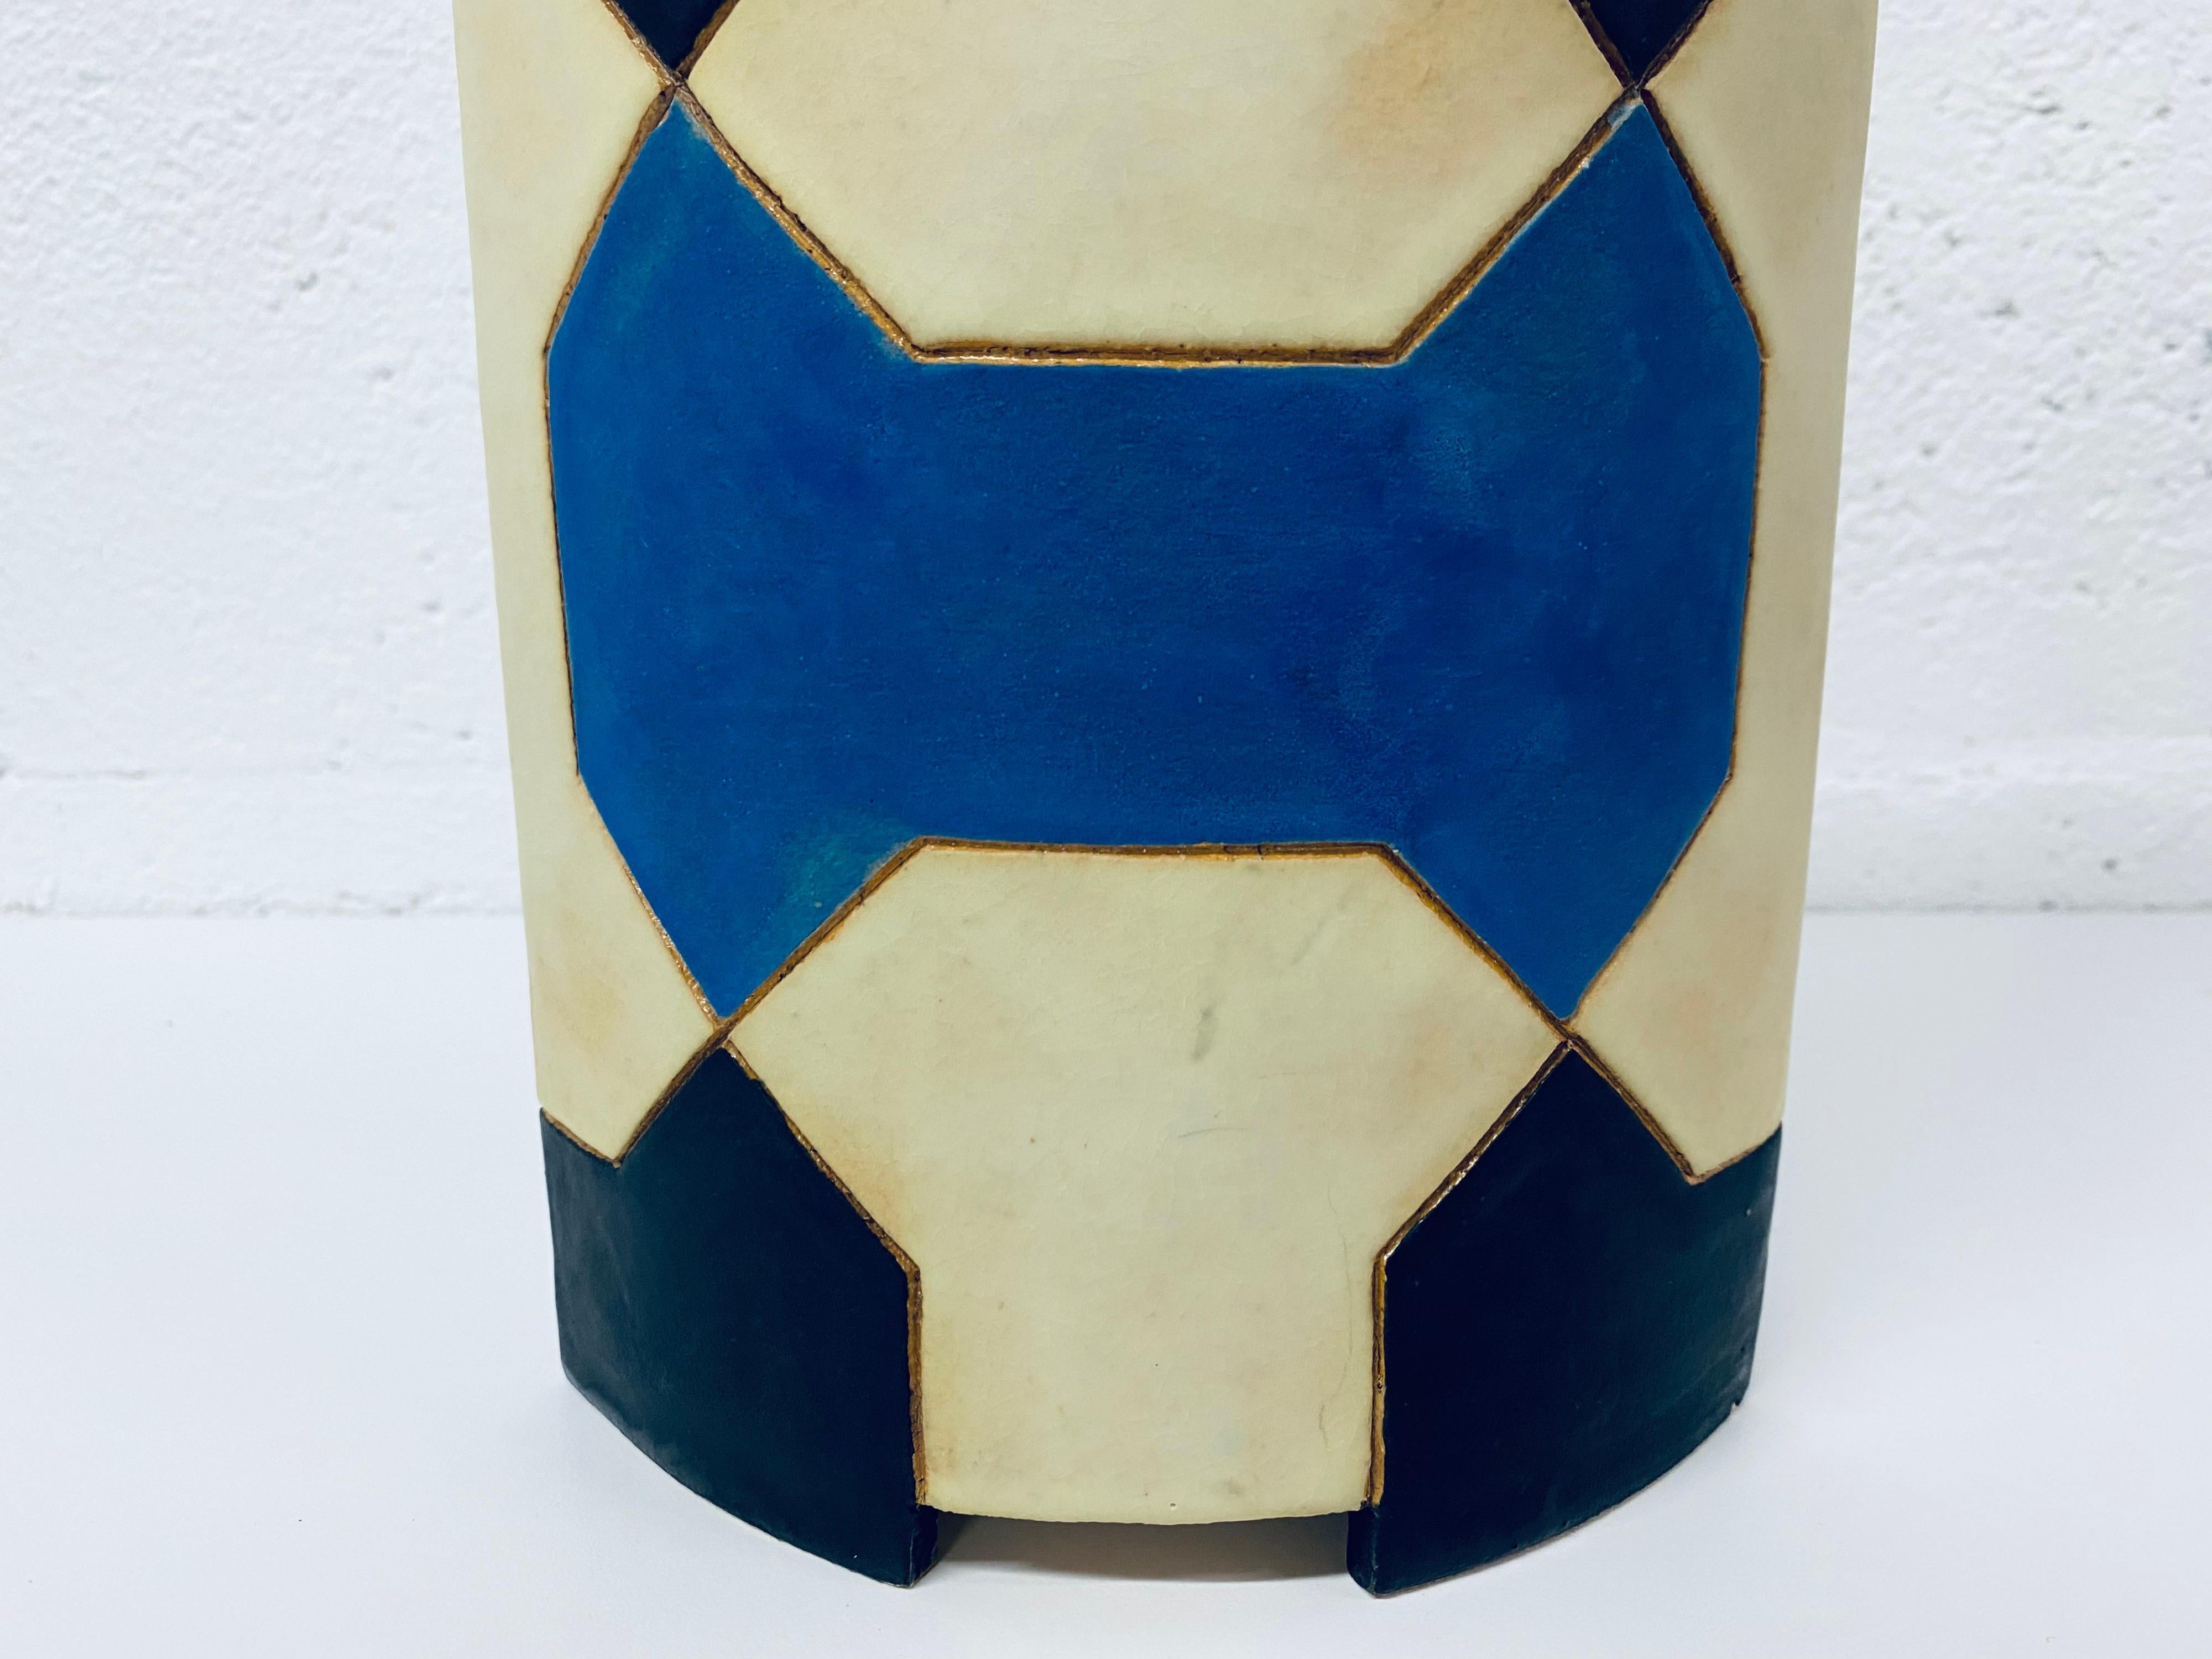 Midcentury Sculptural Geometric Vase Signed by Artist 2